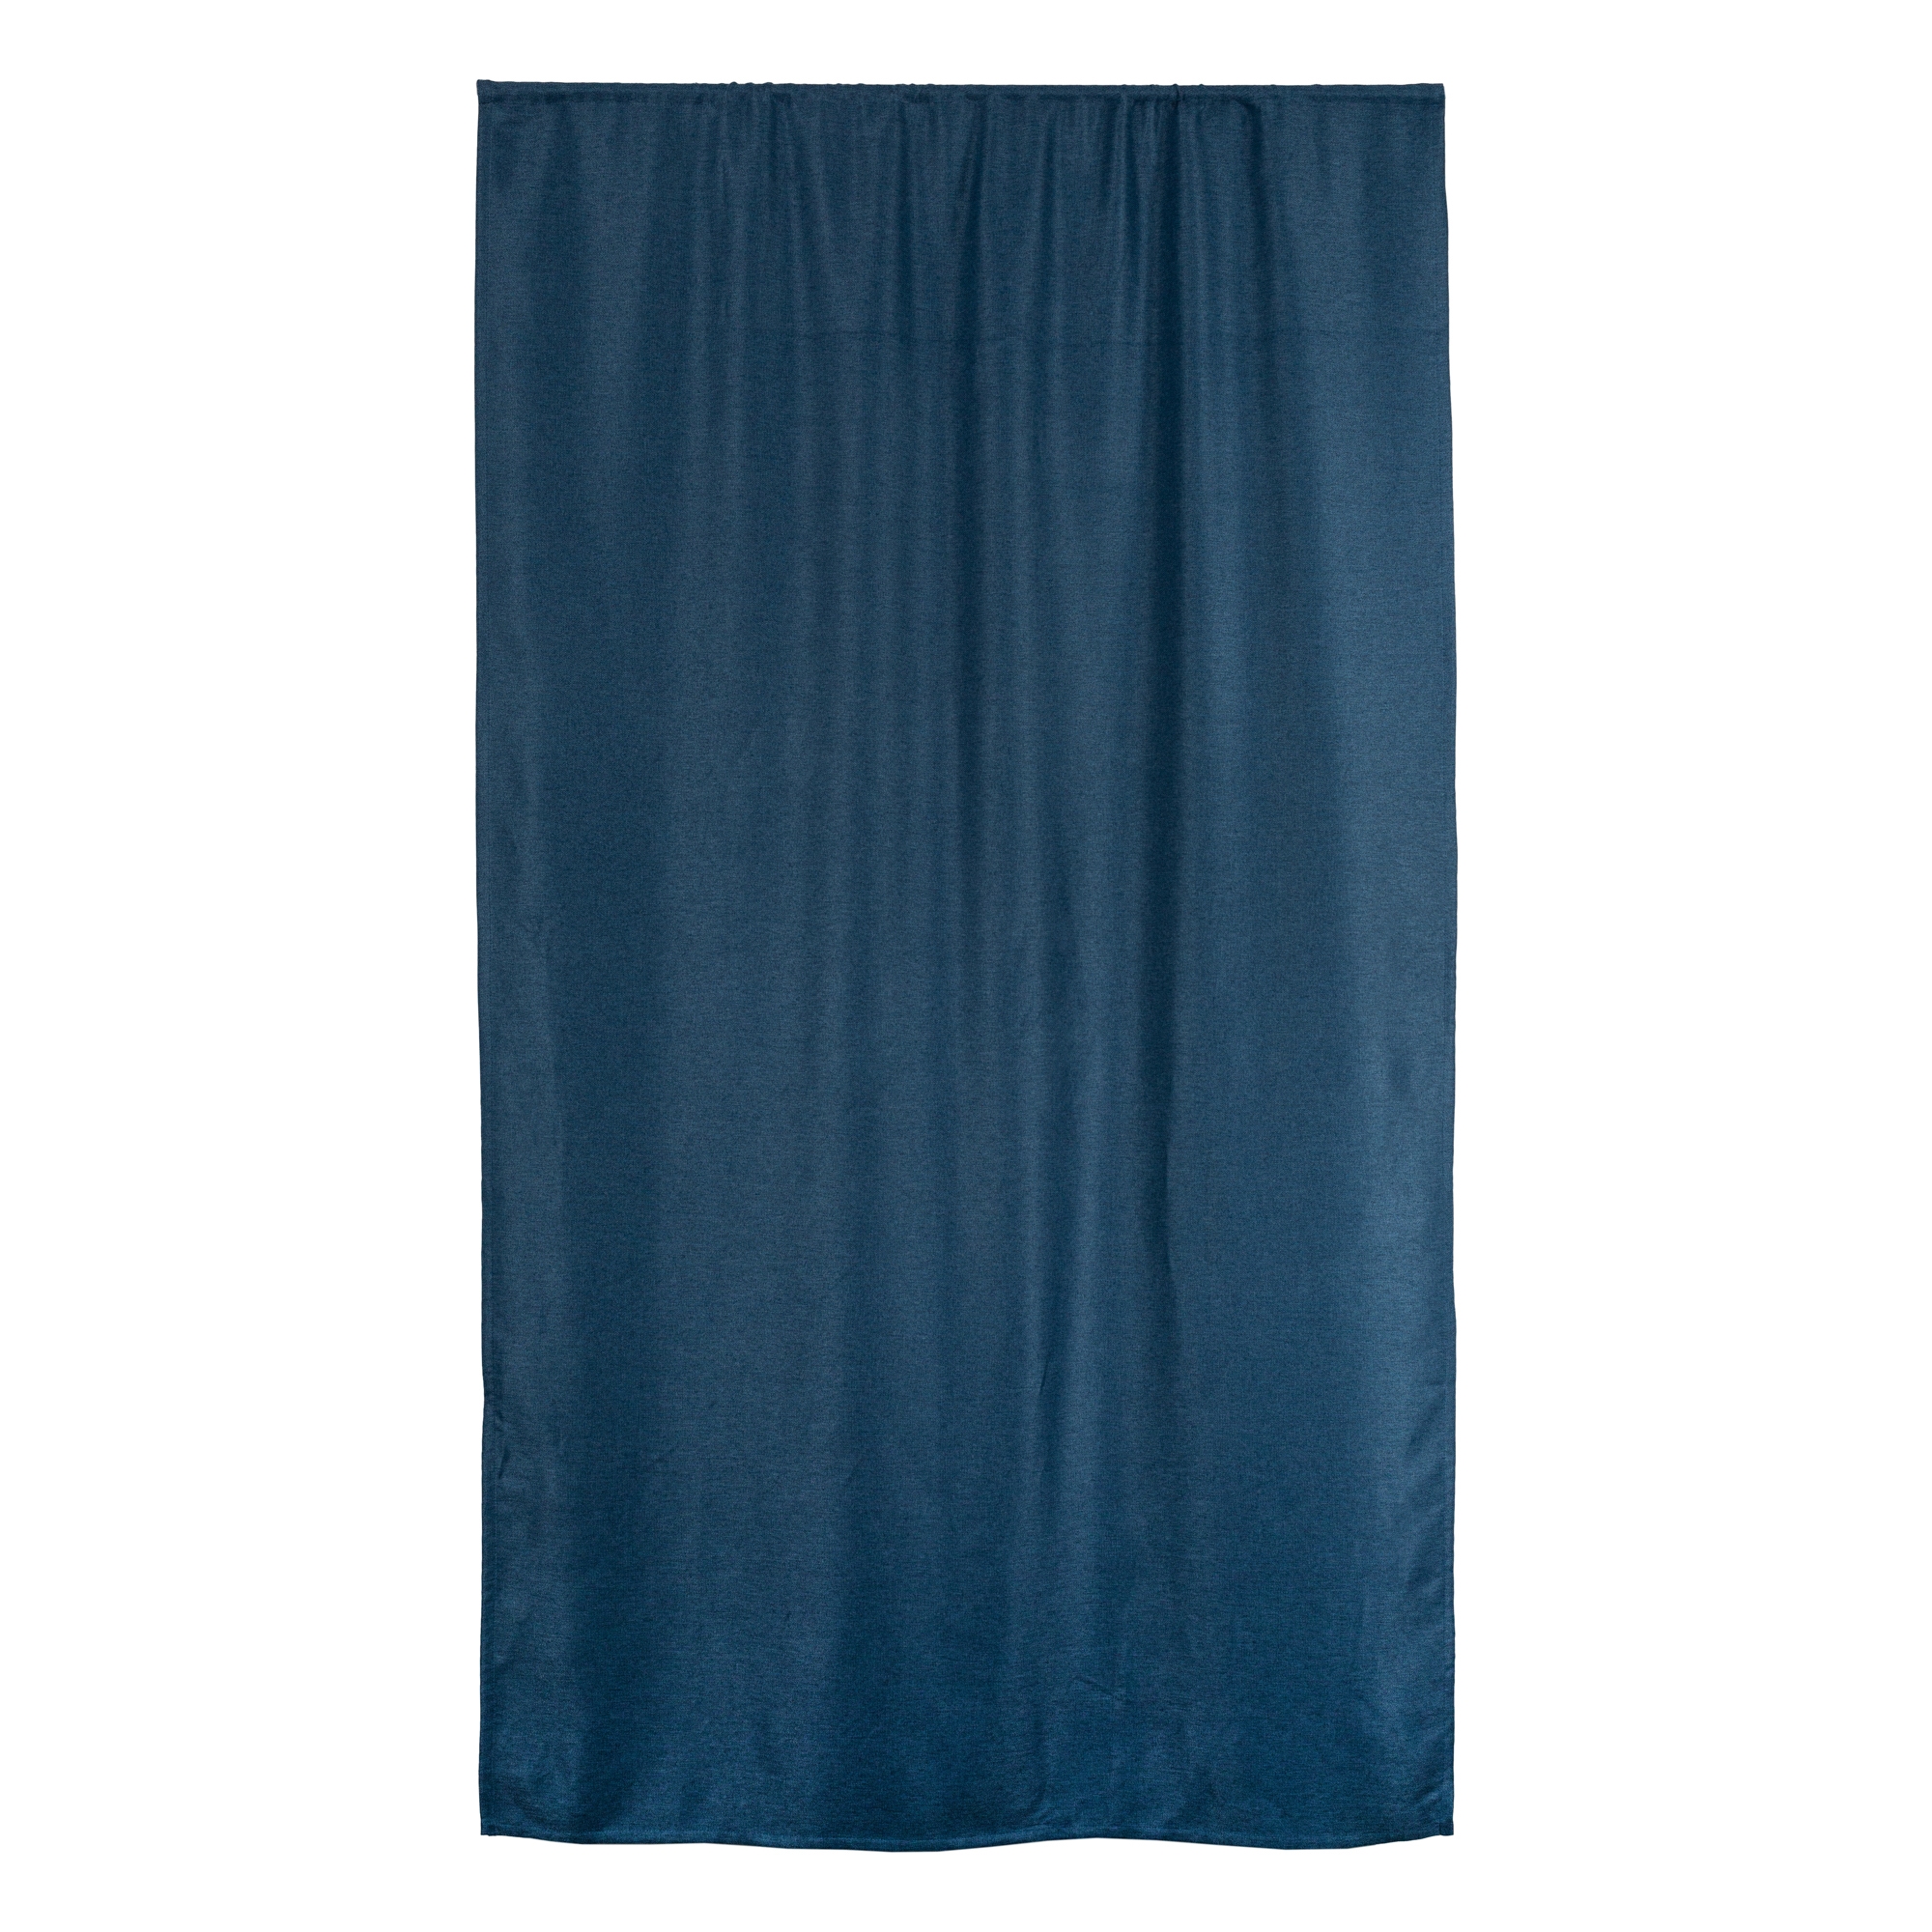 Draperie SN Deco, JTH 89/20, poliester, albastru inchis, opac, 280 cm